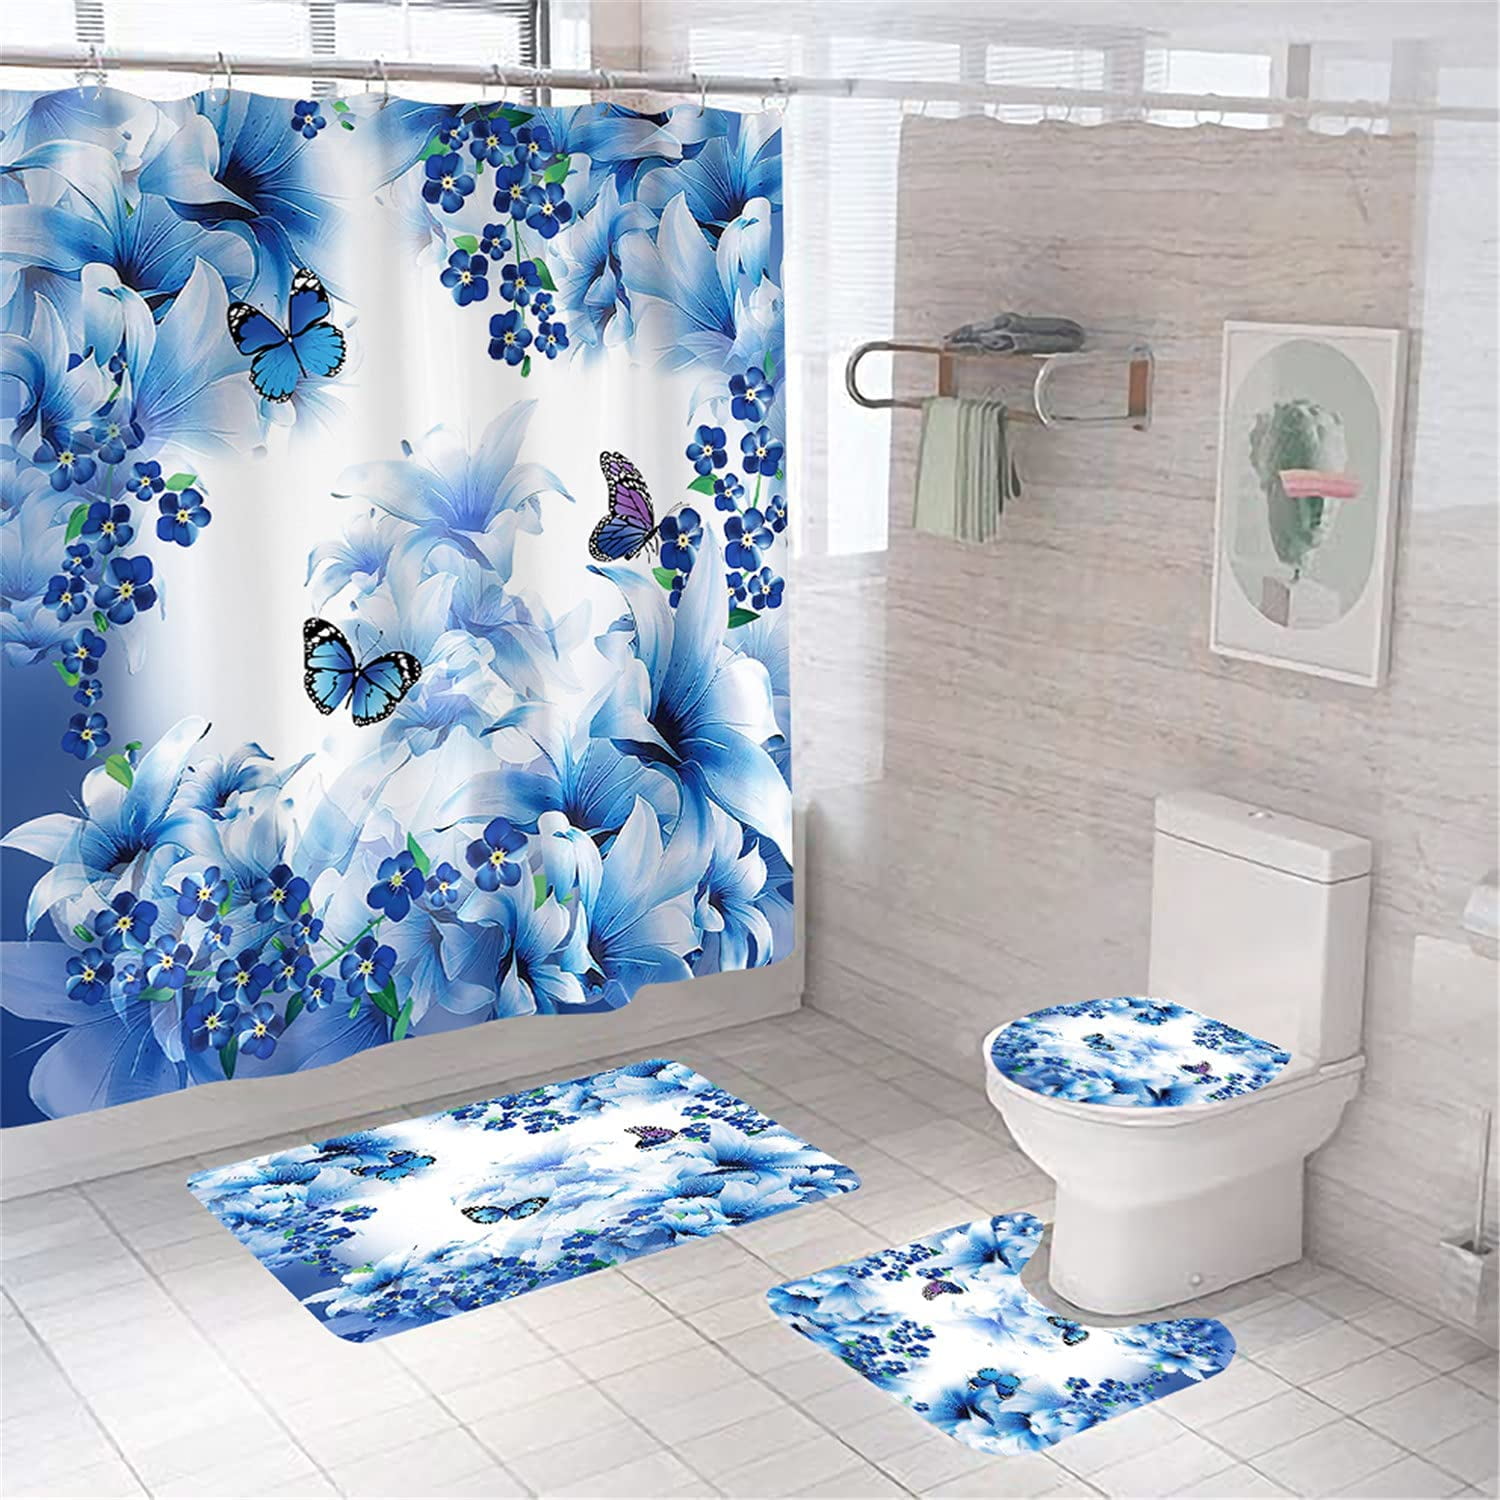 White & Black Flowers Butterfly Waterproof Fabric Bathroom Shower Curtain Set 